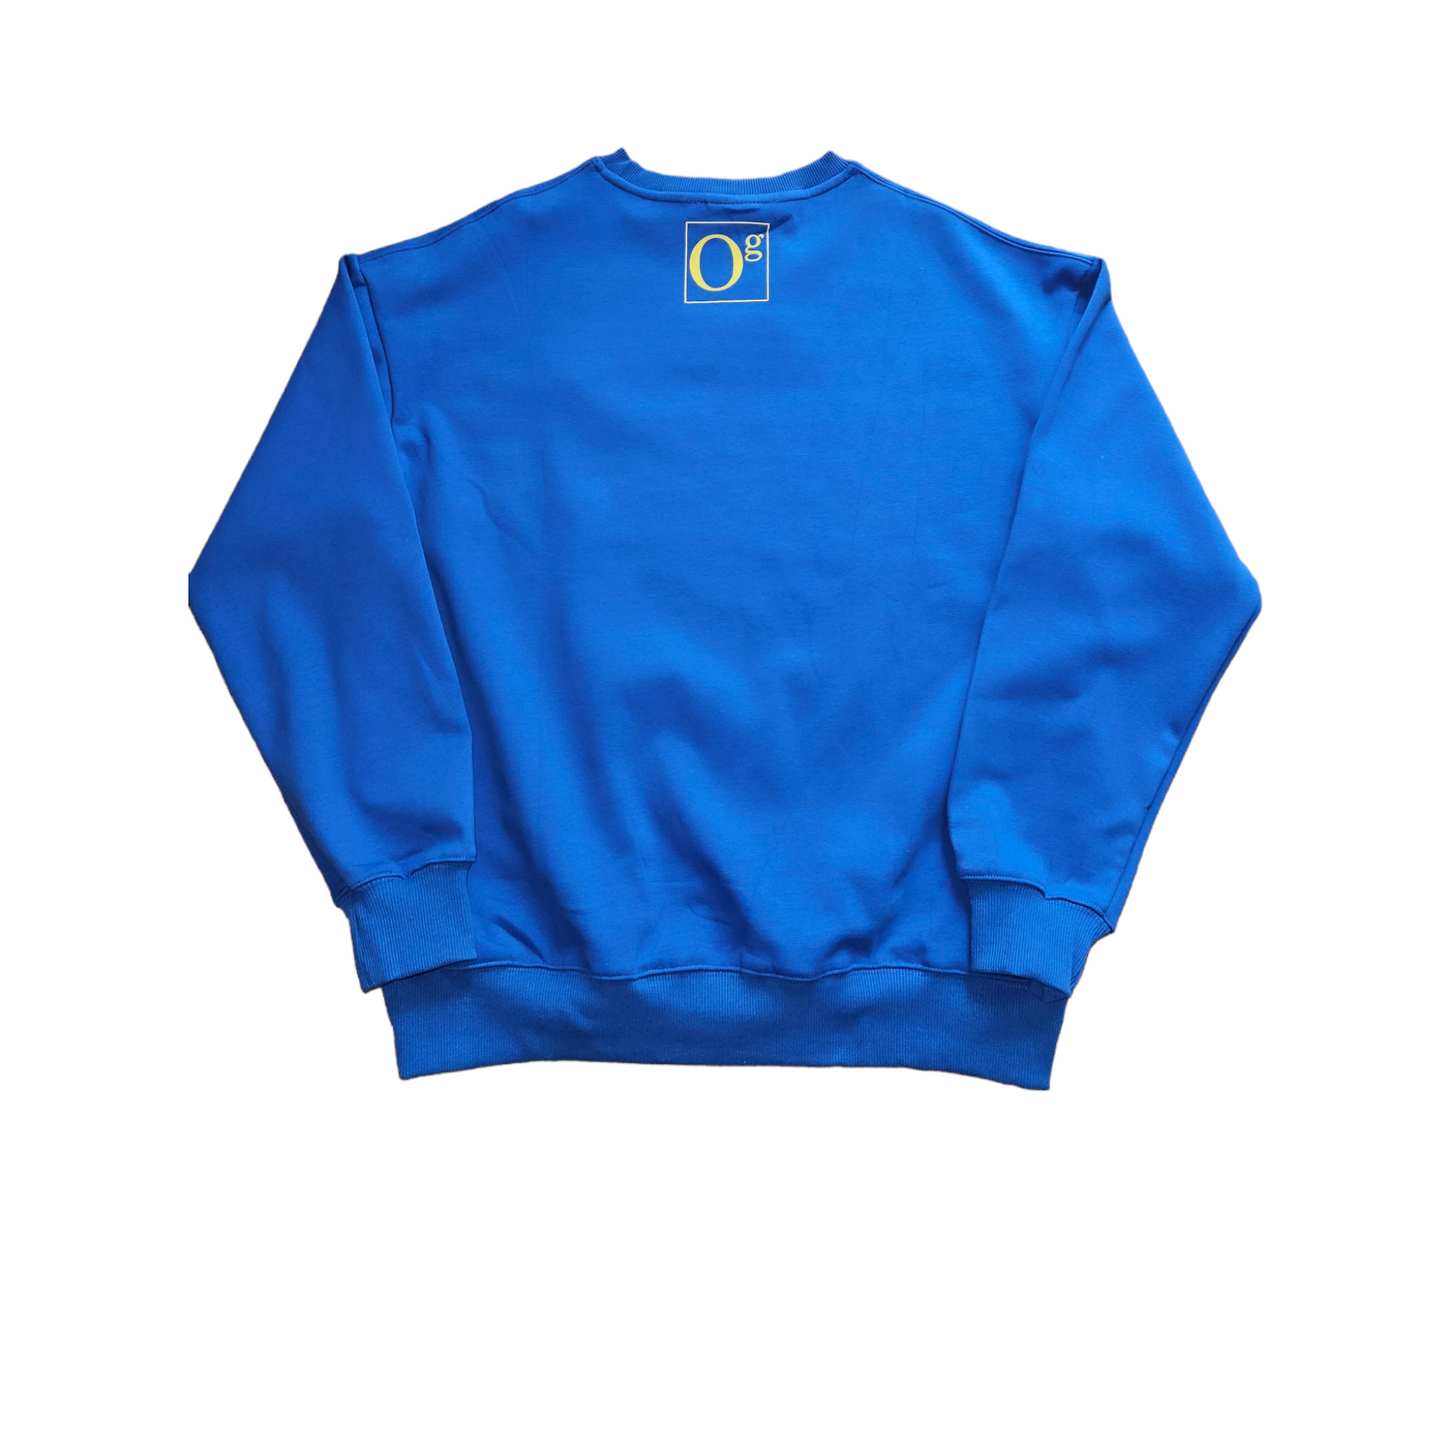 oG Signature Sweatshirt Royal Blue